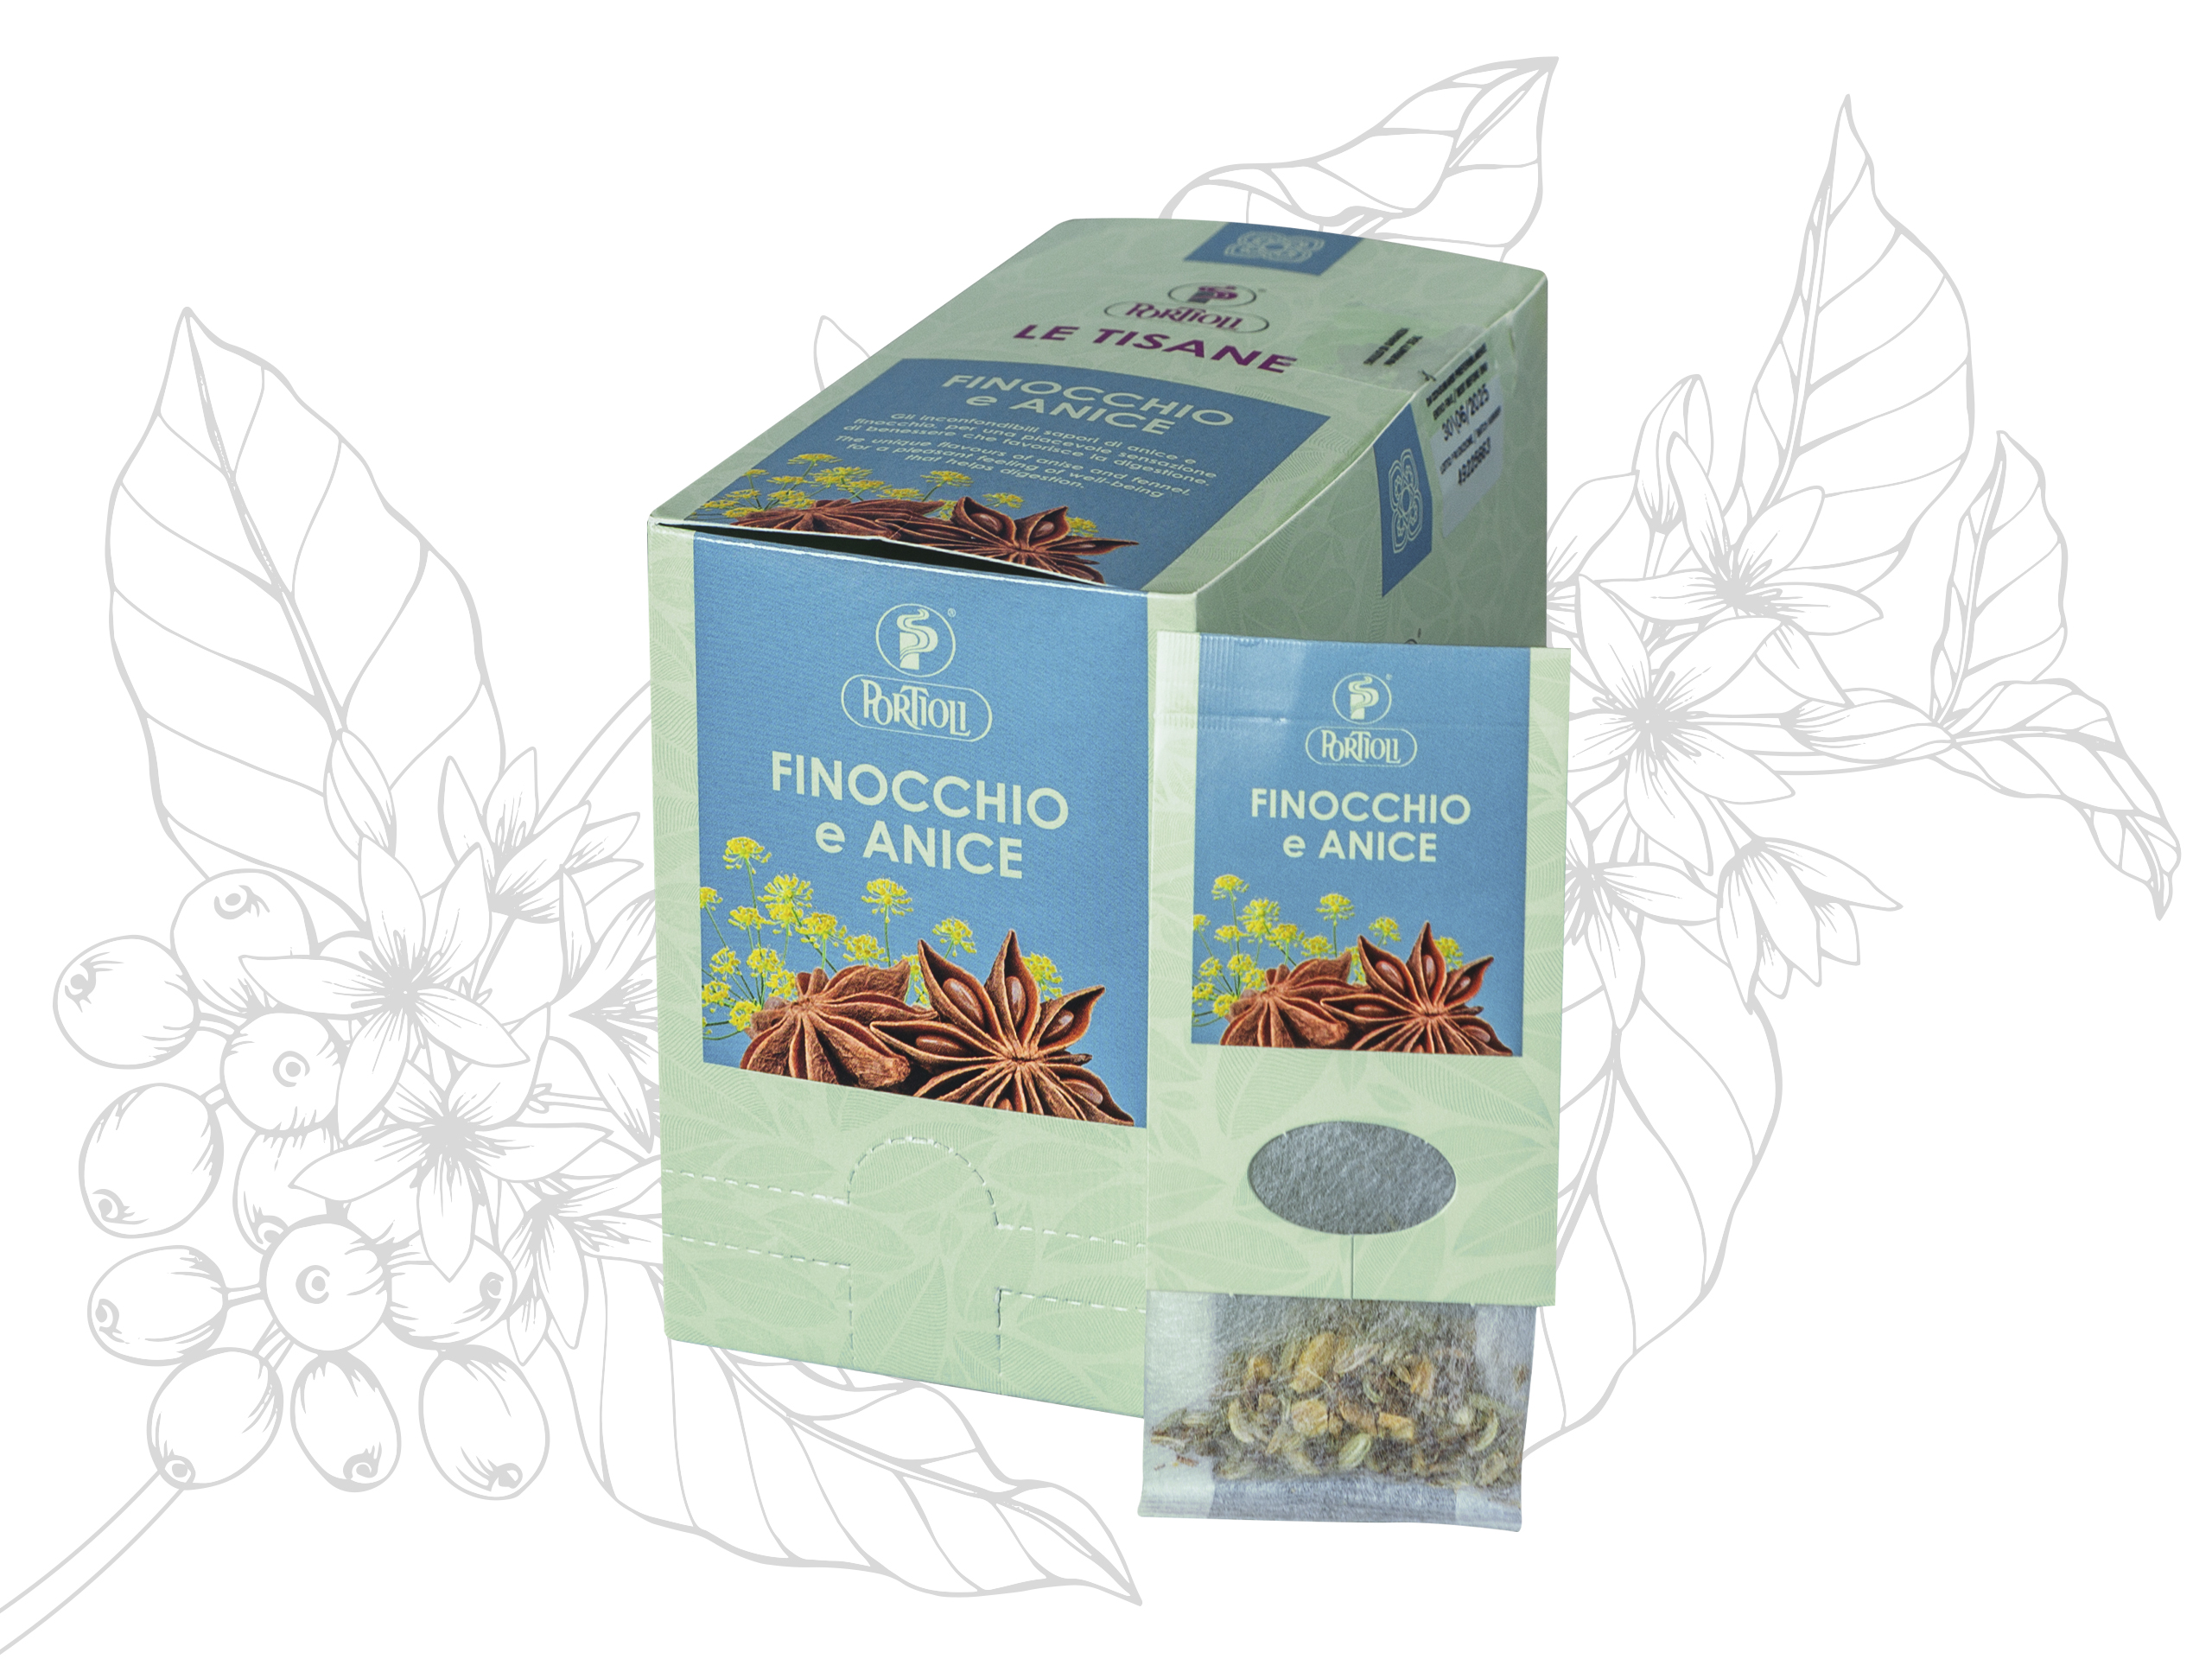 Portioli Finocchio e Anice Herbal Tea